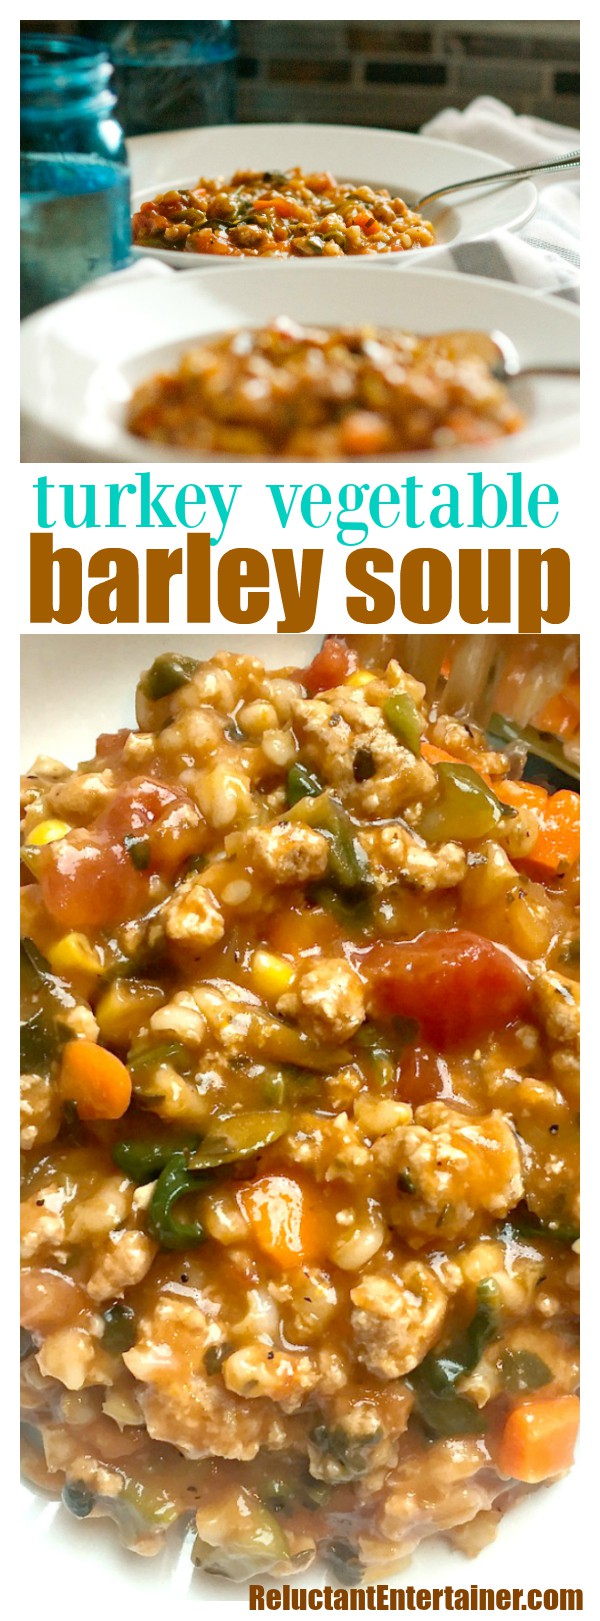 Turkey & Barley Soup